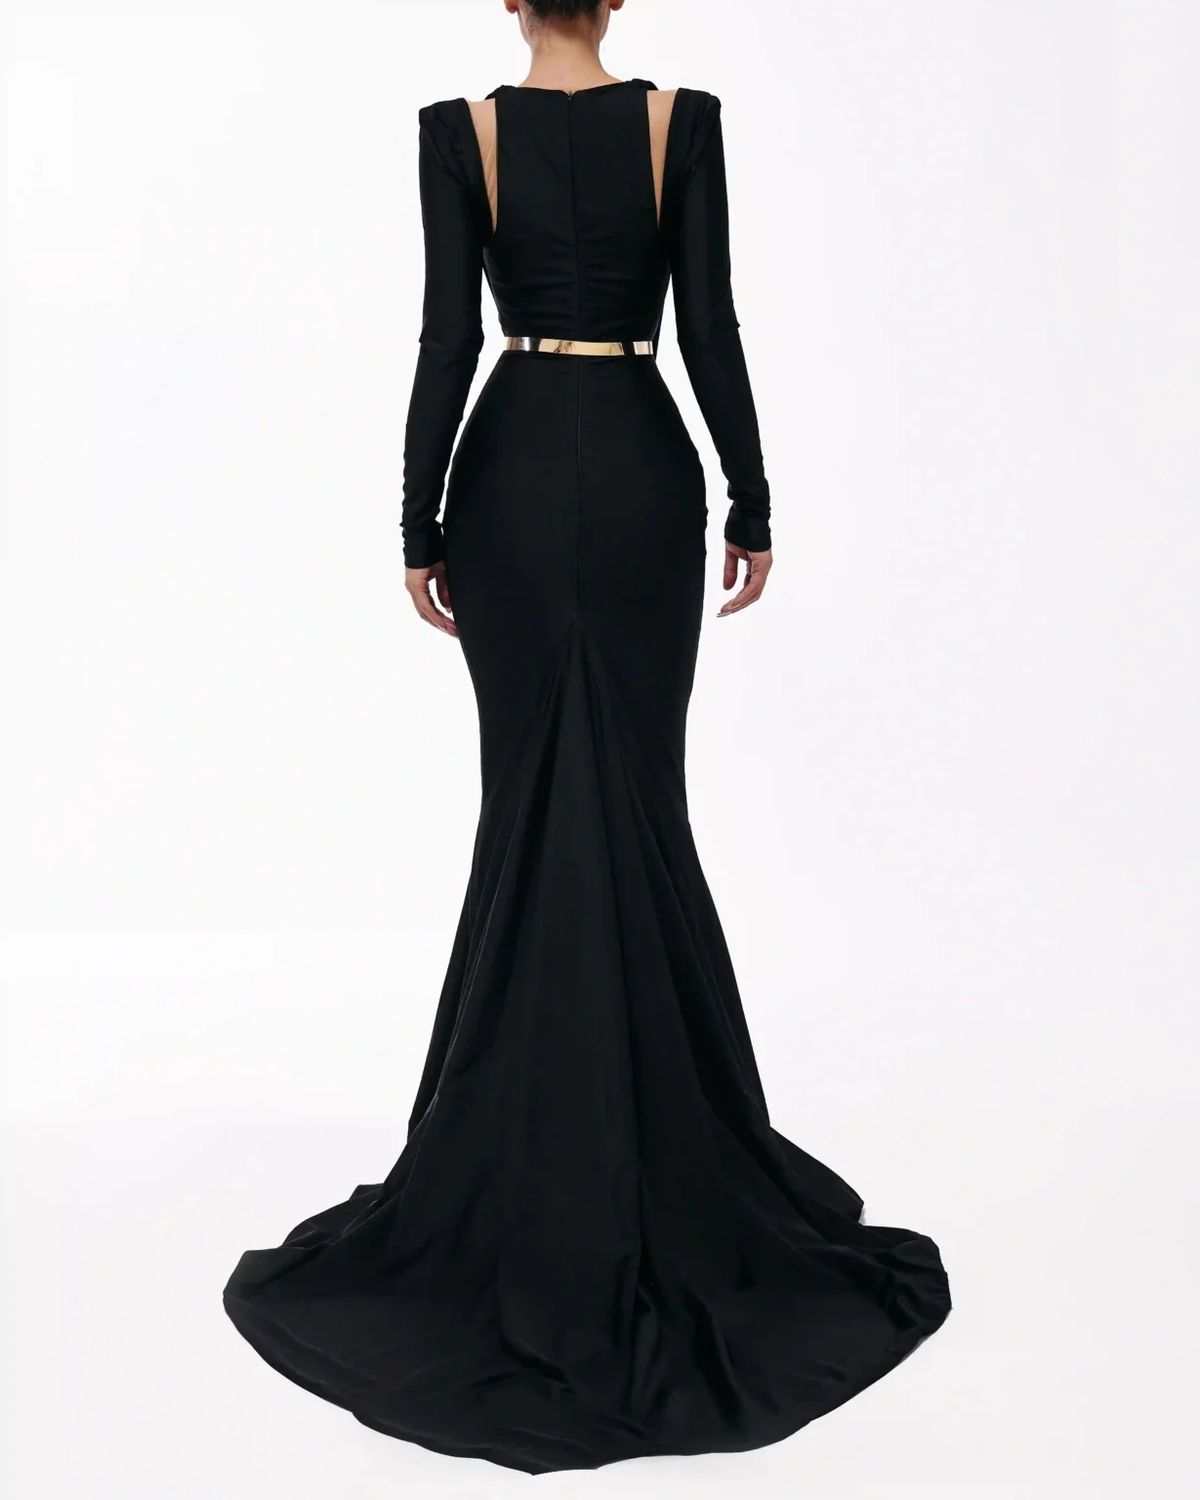 Style euphoria-24-2 Valdrin Sahiti Size L Pageant Black Mermaid Dress on Queenly